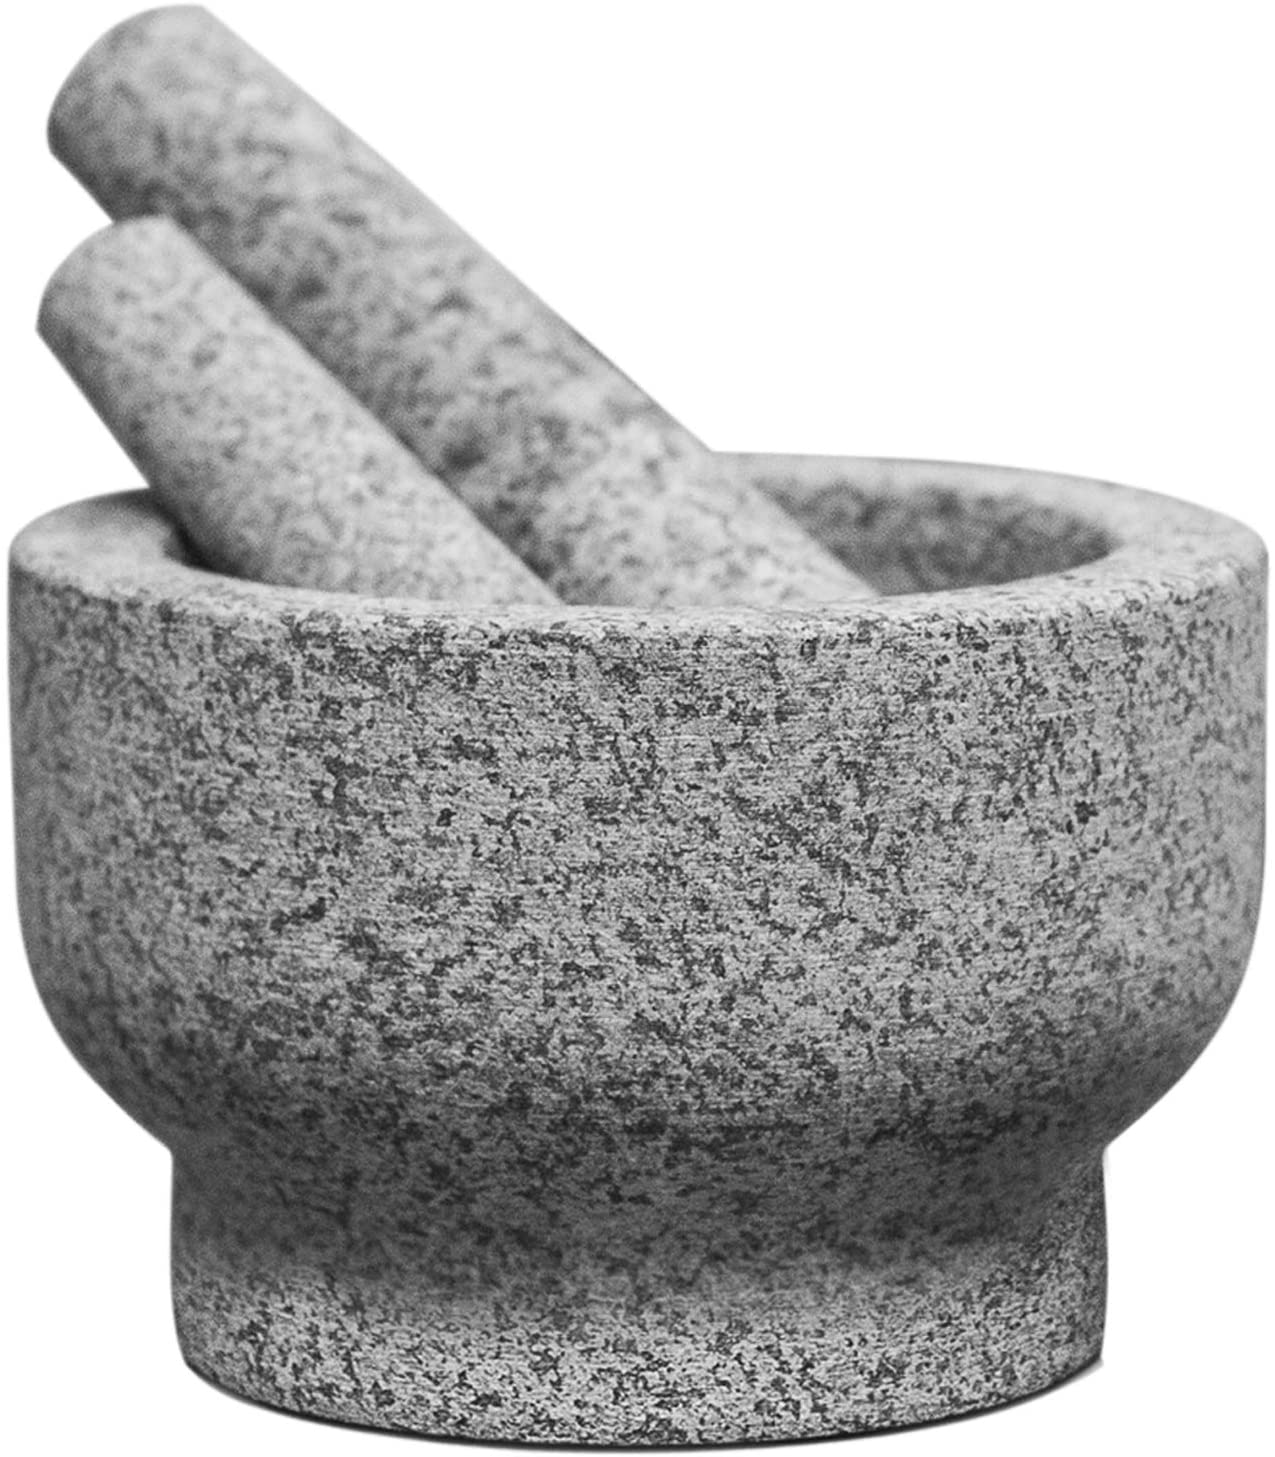 ChefSofi Mortar and Pestle Set - Unpolished Heavy Granite for Enhanced